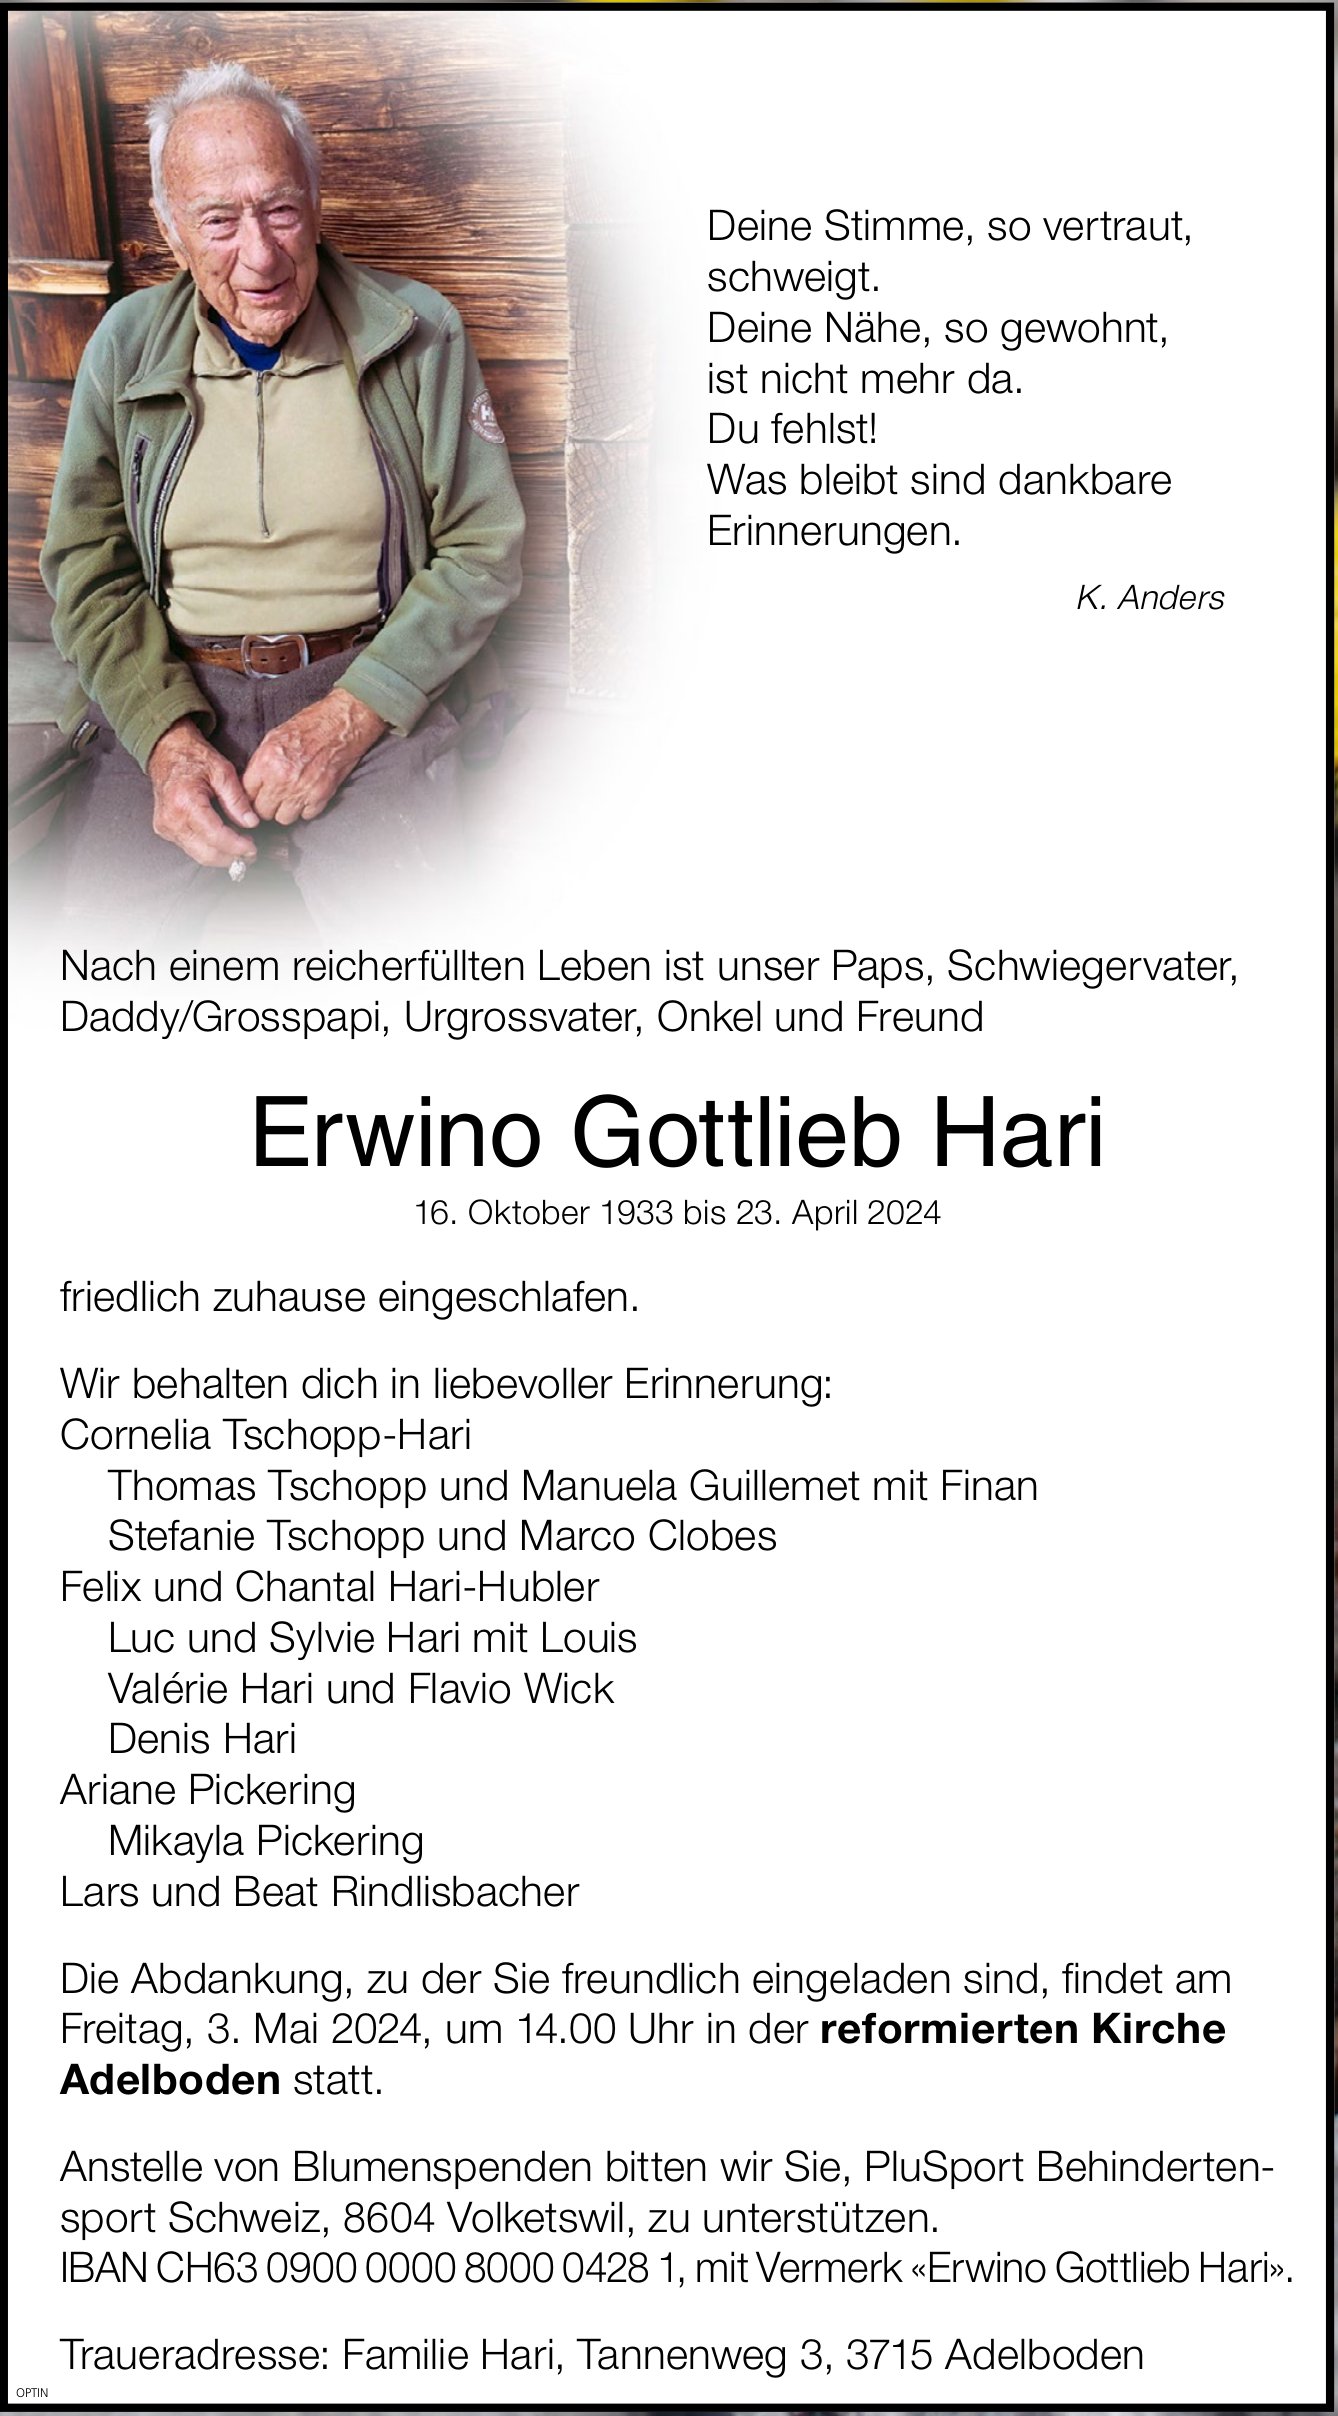 Erwino Gottlieb Hari, April 2024 / TA